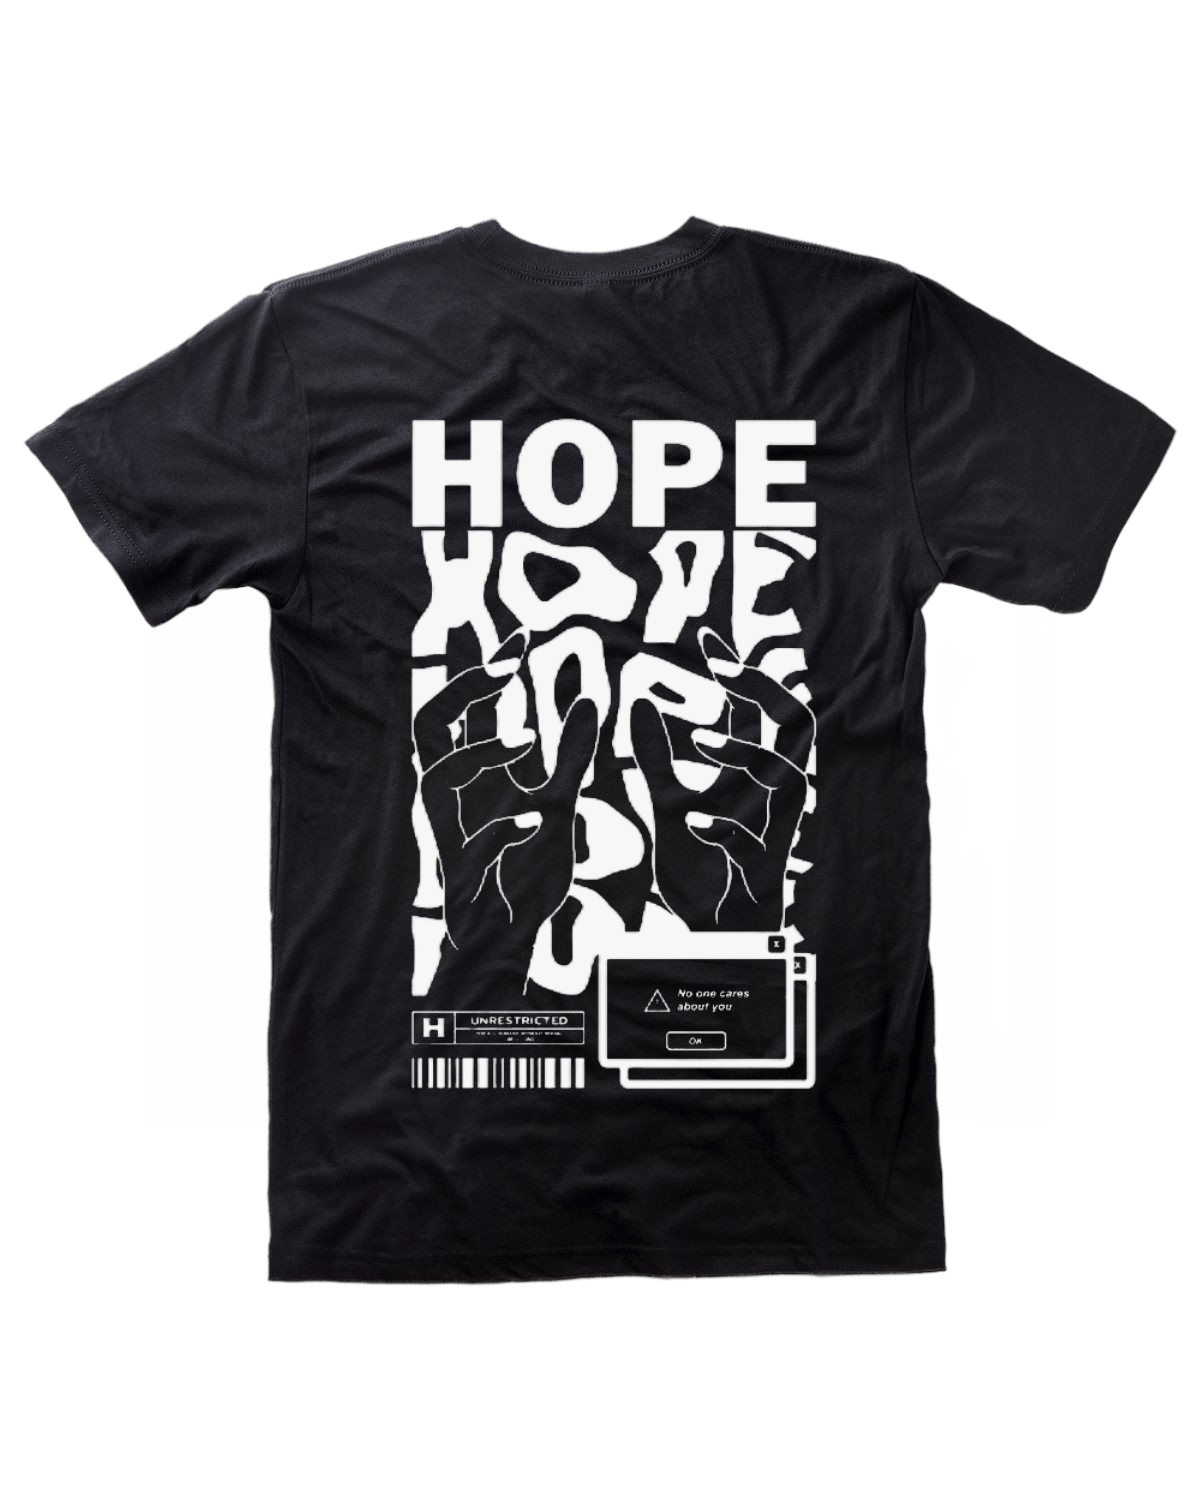 ‘Hope' graphic tee